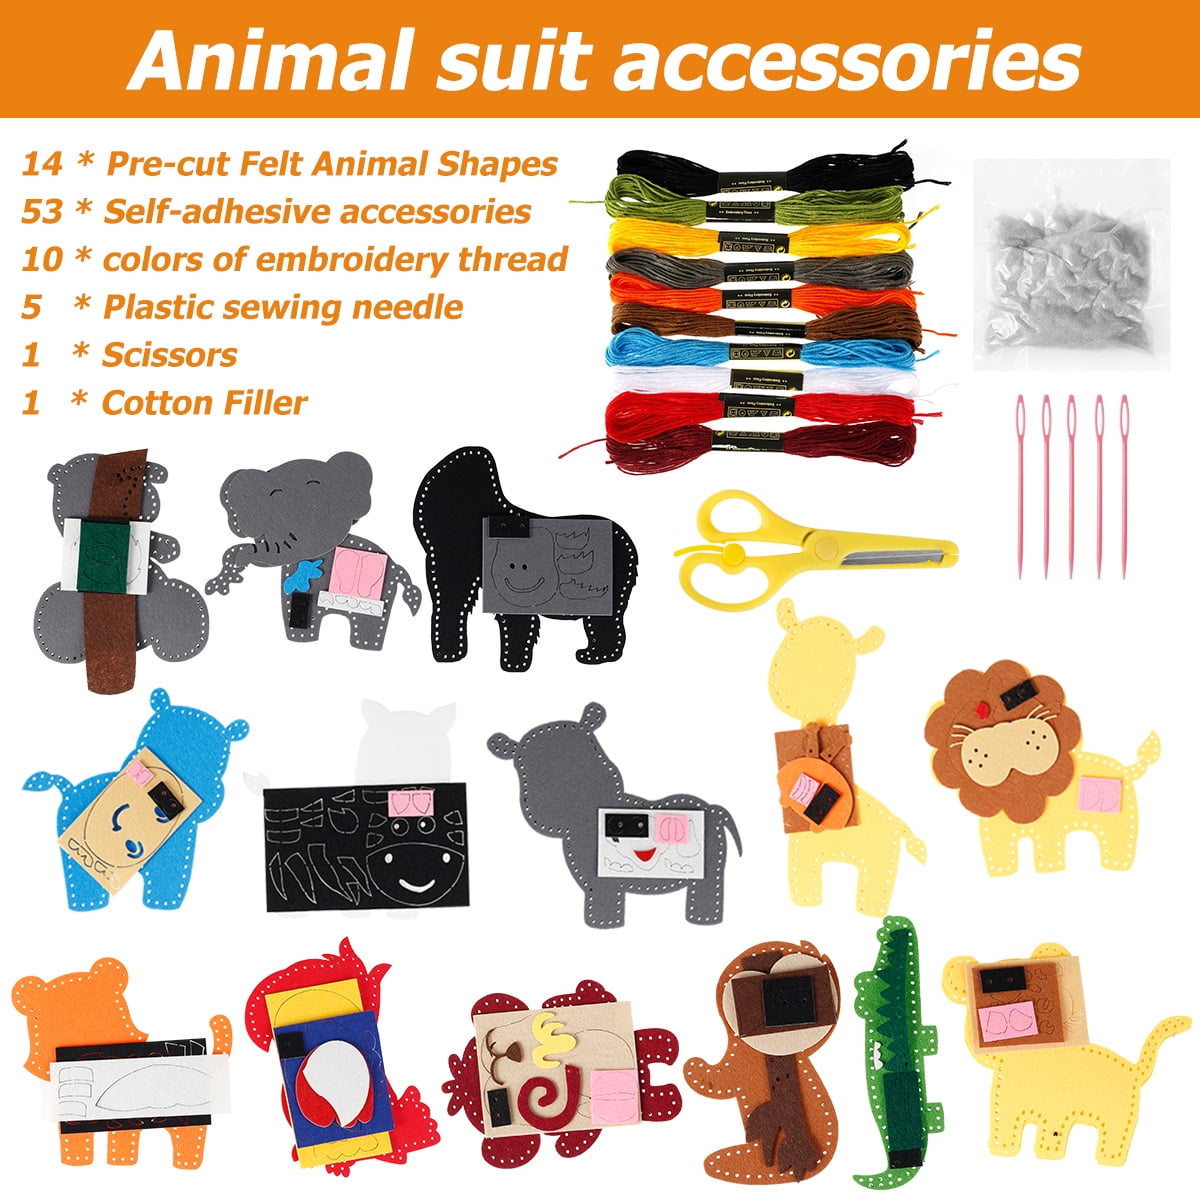 Creativity Street Felt Sewing Animal Kits 10 12 x 6 12 x 1 Monkey Set Of 6  Kits - Office Depot